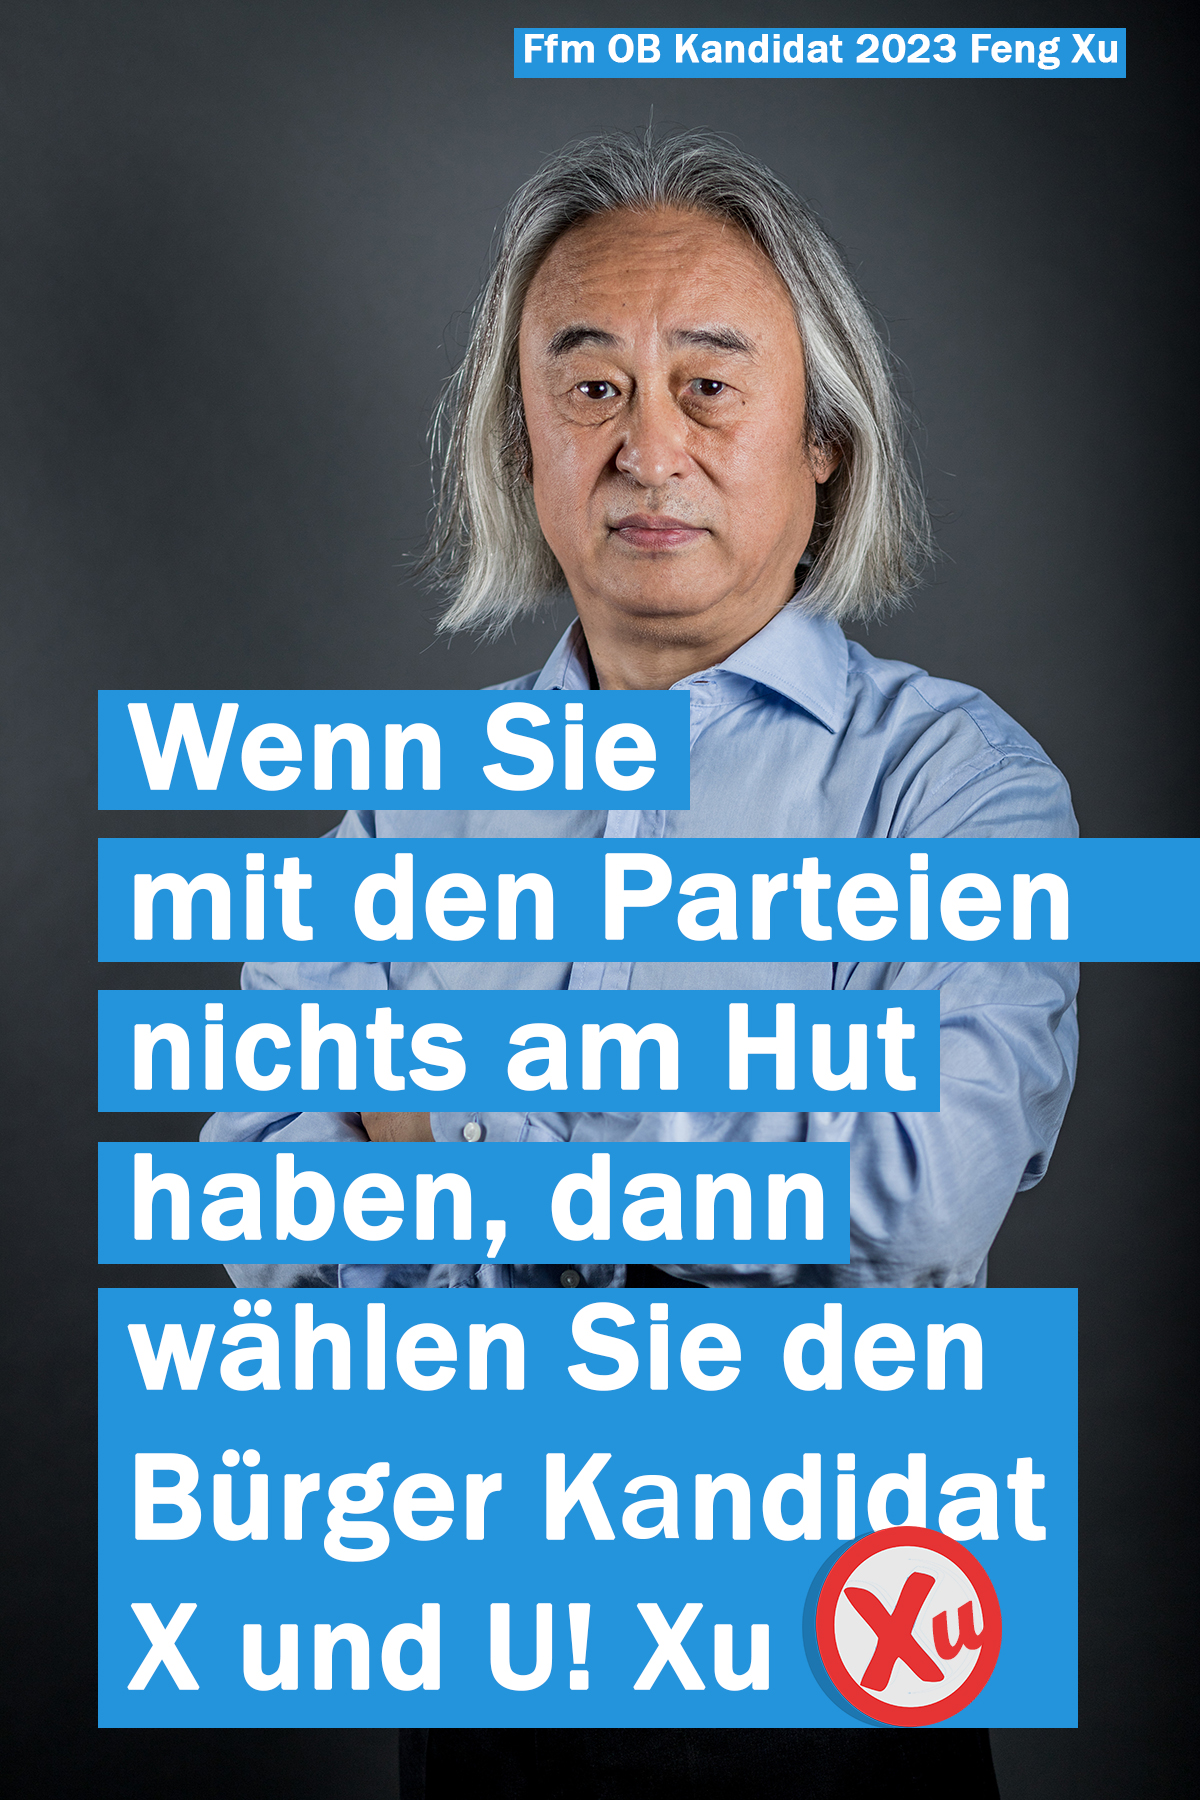 Wählen Sie den Frankfurter Bürger Kandidat Feng Xu!